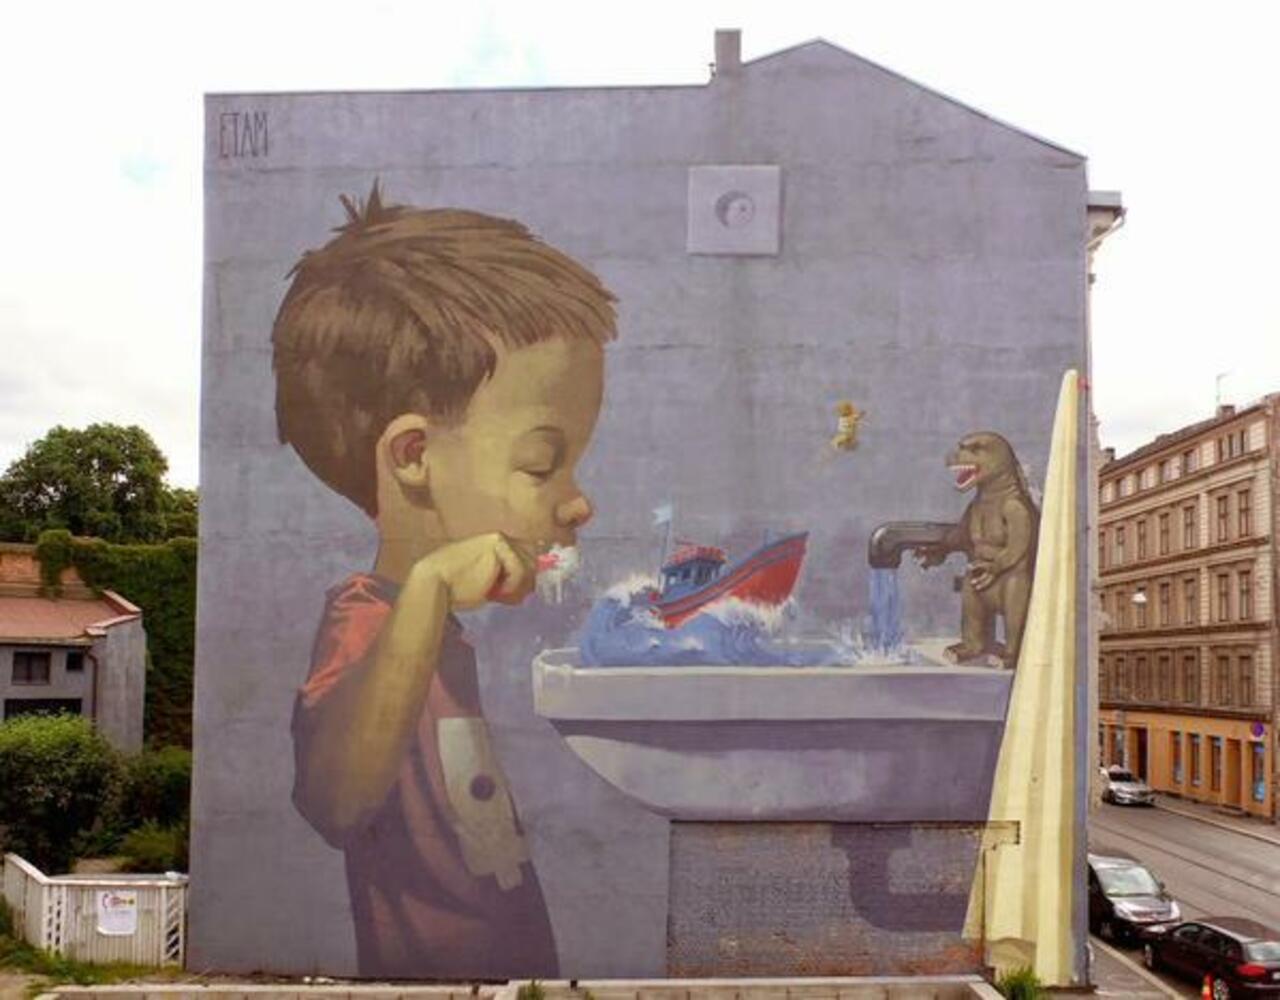 RT @VisitOSLO: RT @ErkenciTayfa #streetart #graffiti #sprayart  #urbanart #urbanwalls in Oslo by Etam Cru http://t.co/RG0LnFMoFr